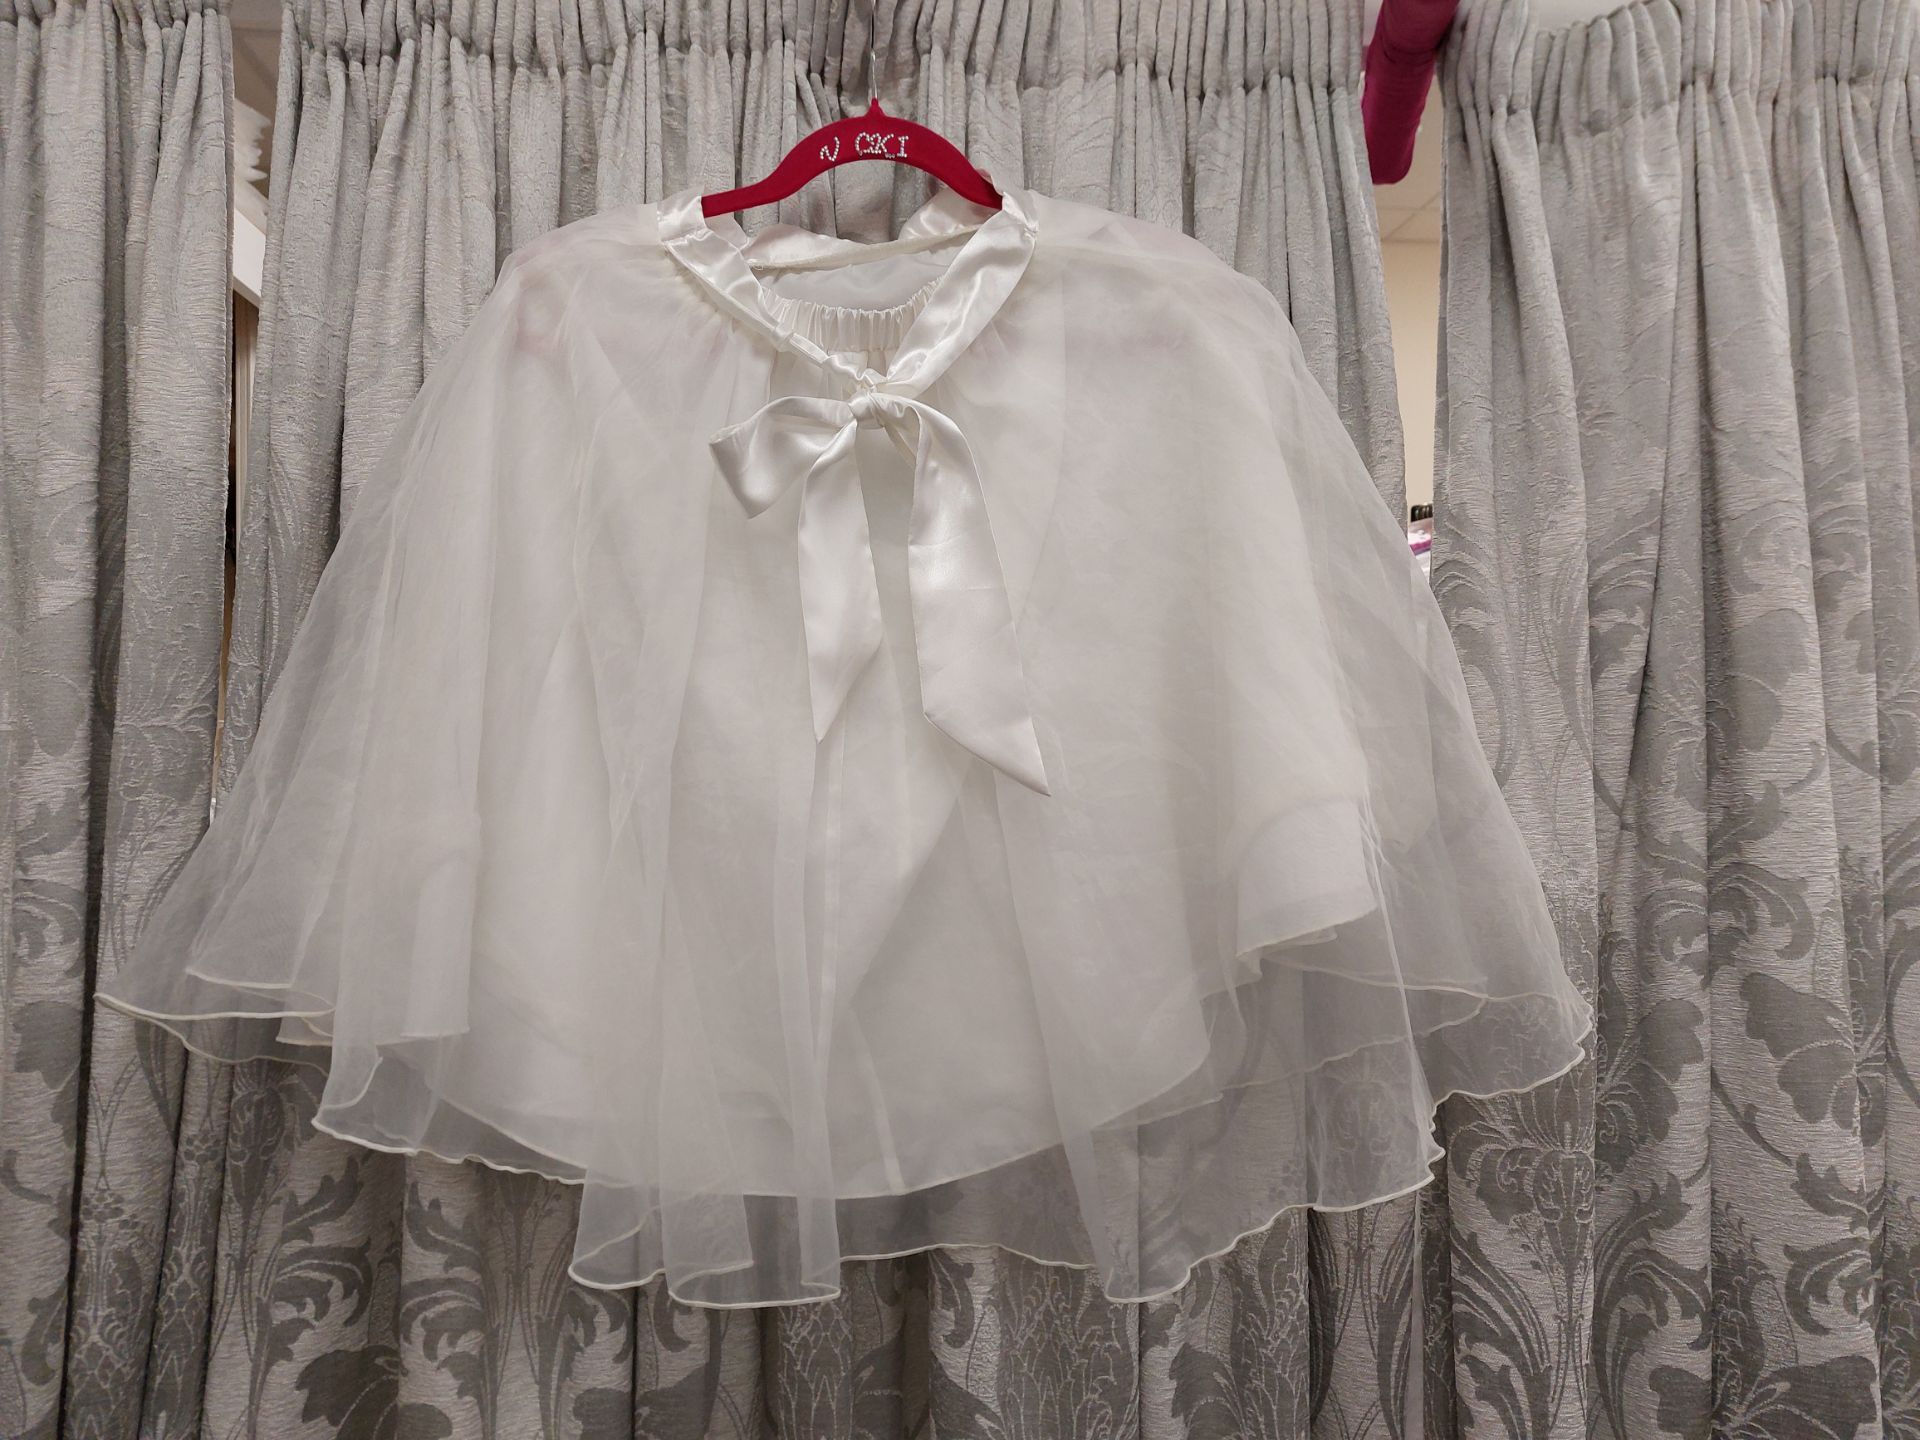 White Childs Petticoat Or Skirt - Image 2 of 2